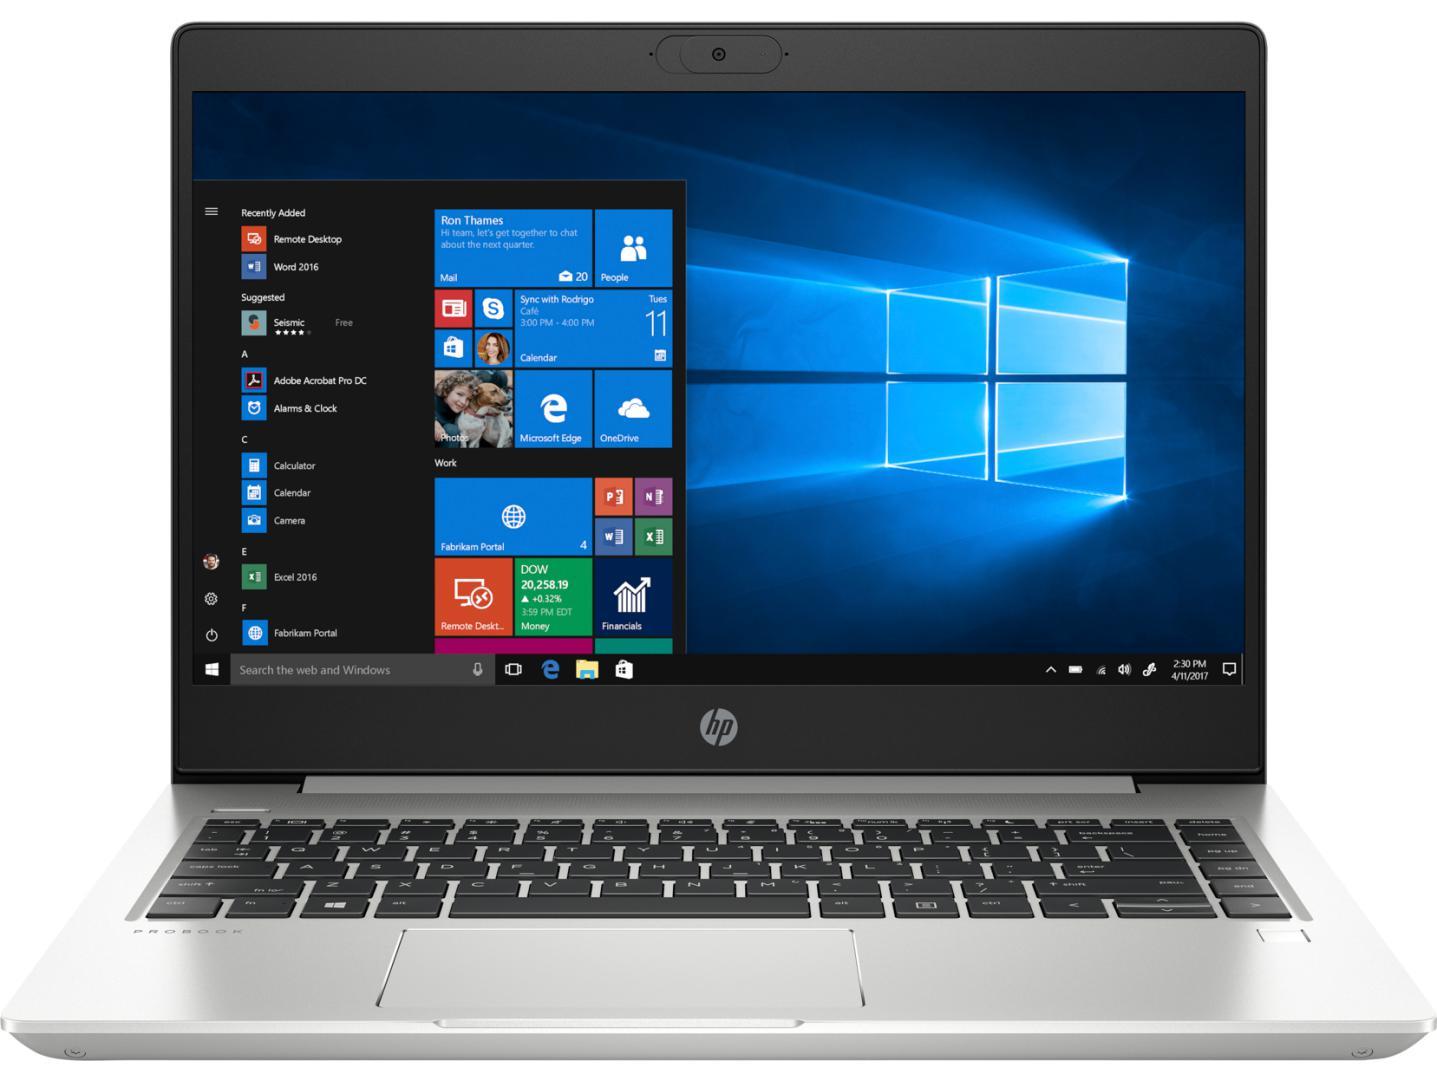 Laptop HP ProBook 445 G7, 14" LED FHD (1920x1080), Anti-Glare,  AMD Ryzen 5 4500U, RAM 8GB, SSD 256GB, Windows 10 PRO 64bit